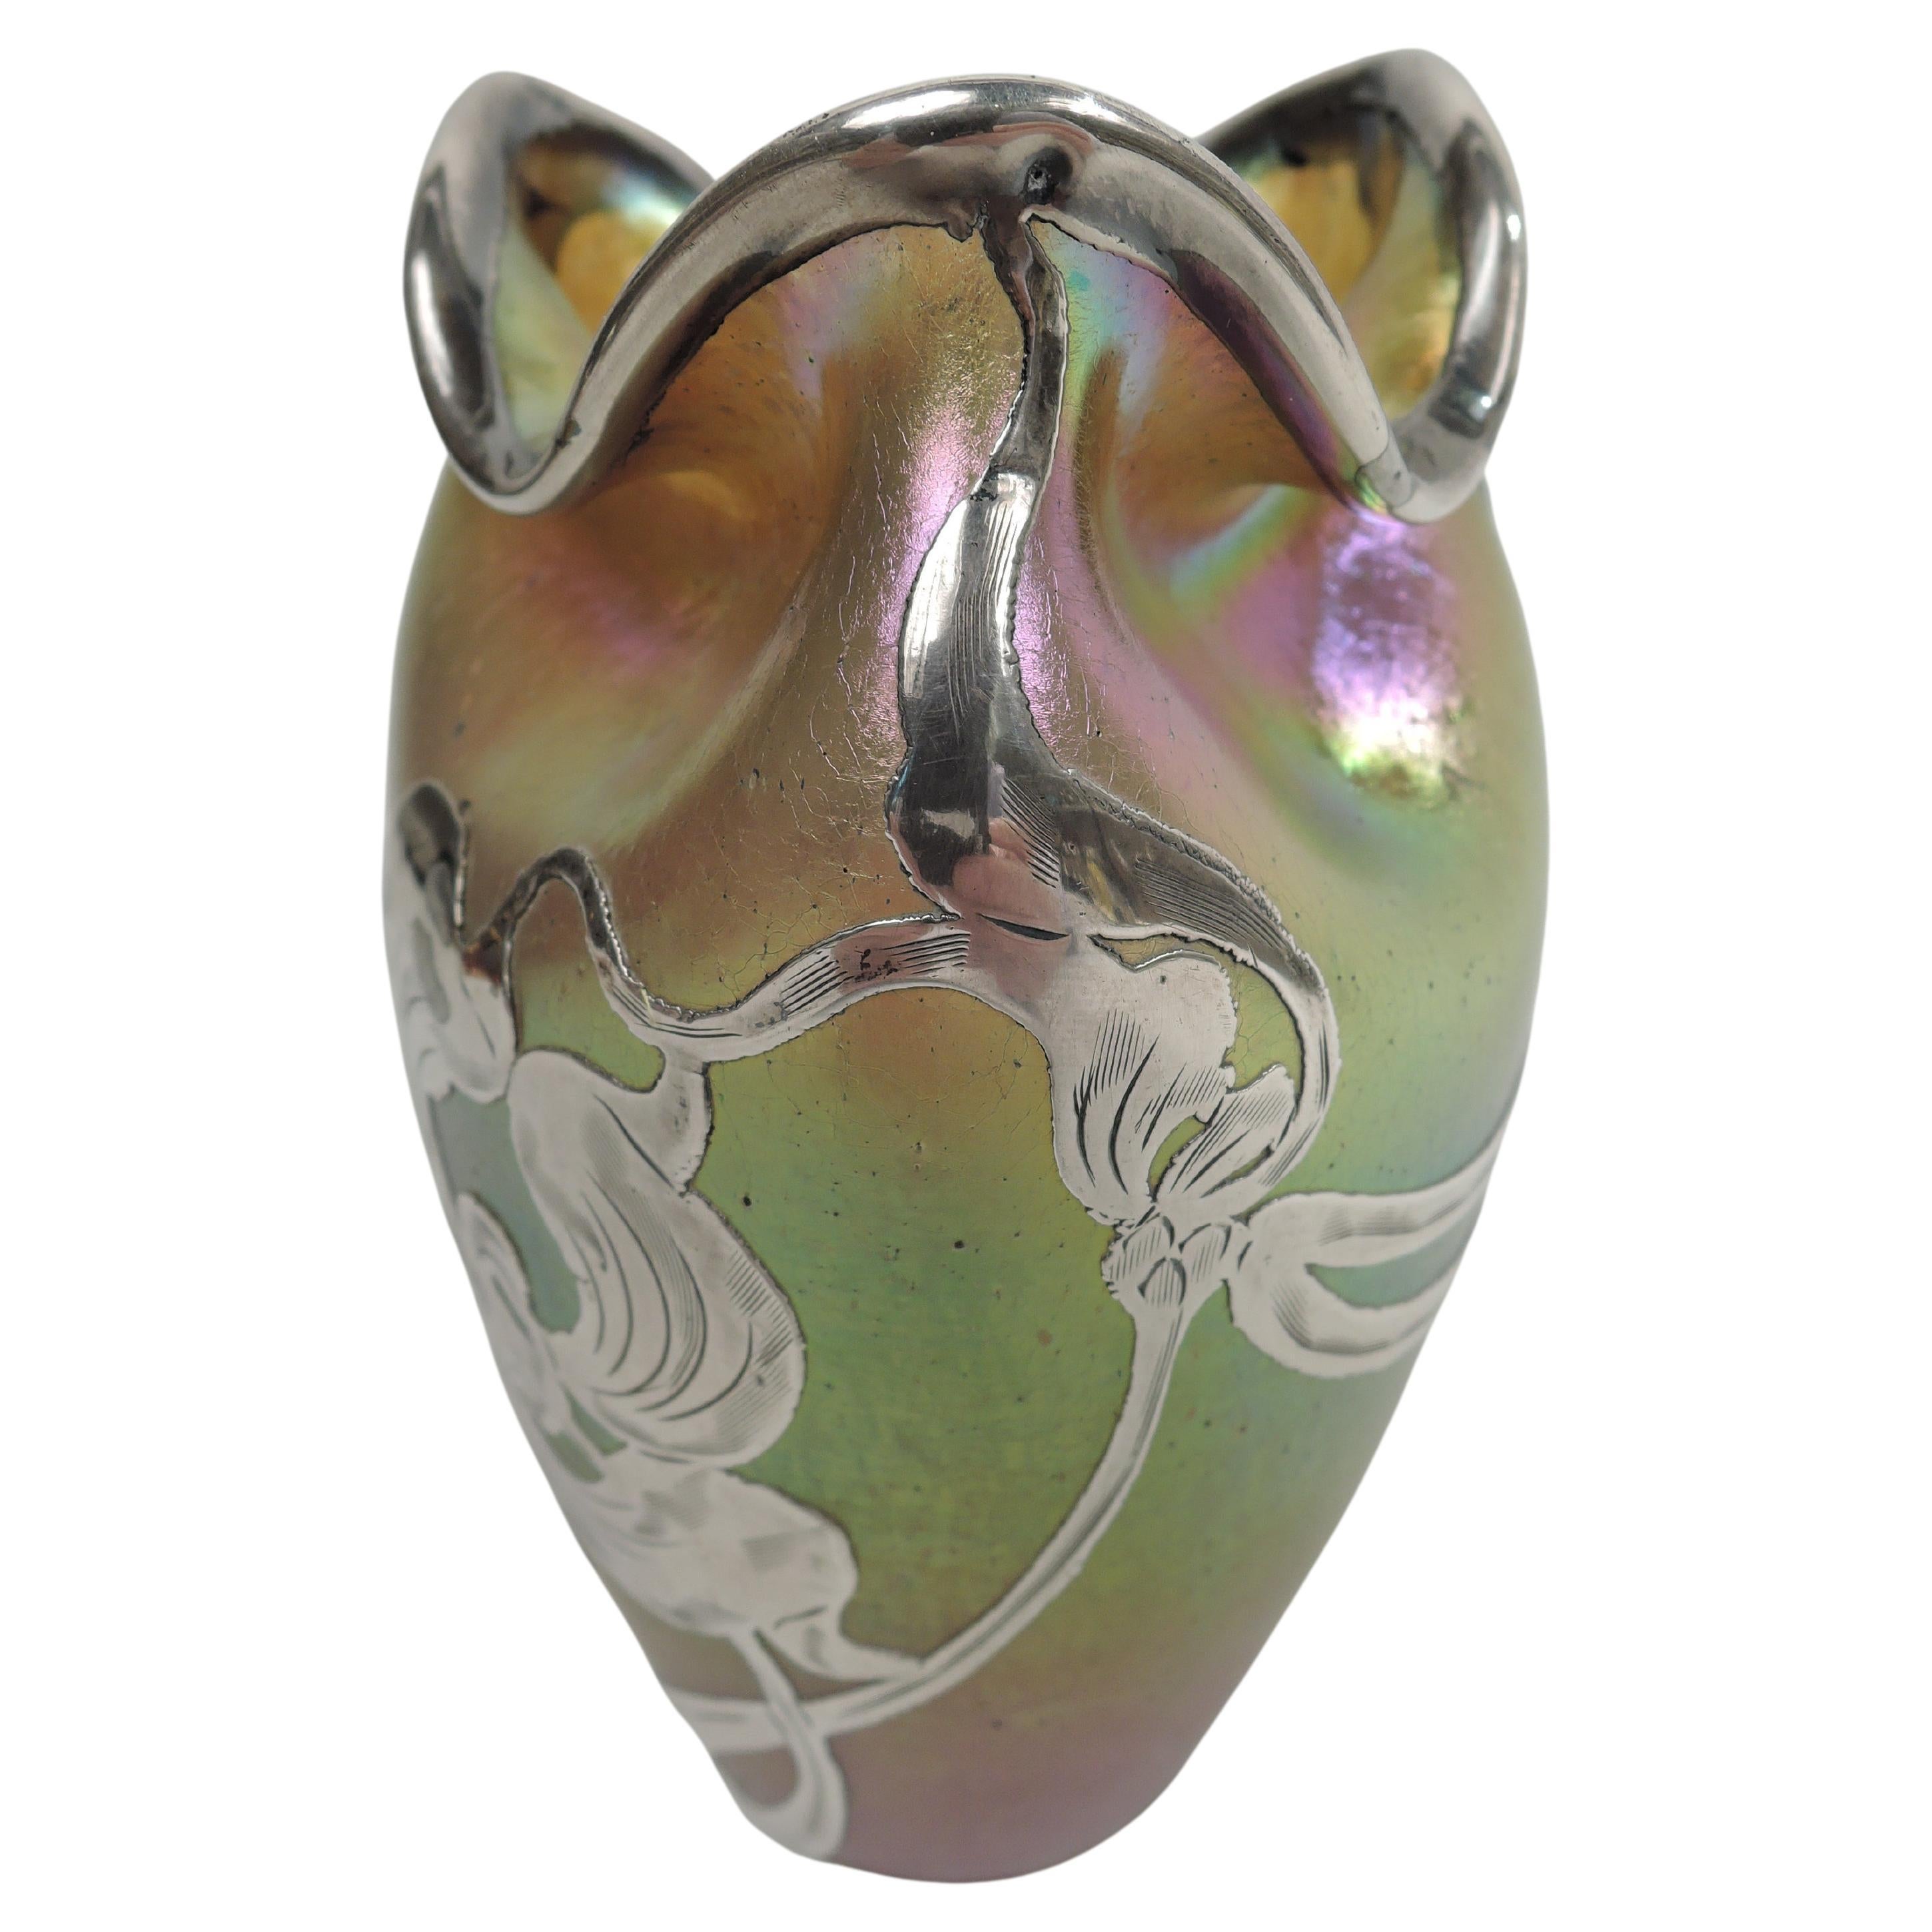 Splendido vaso Loetz Silberiris Art Nouveau con sovrapposizione d'argento